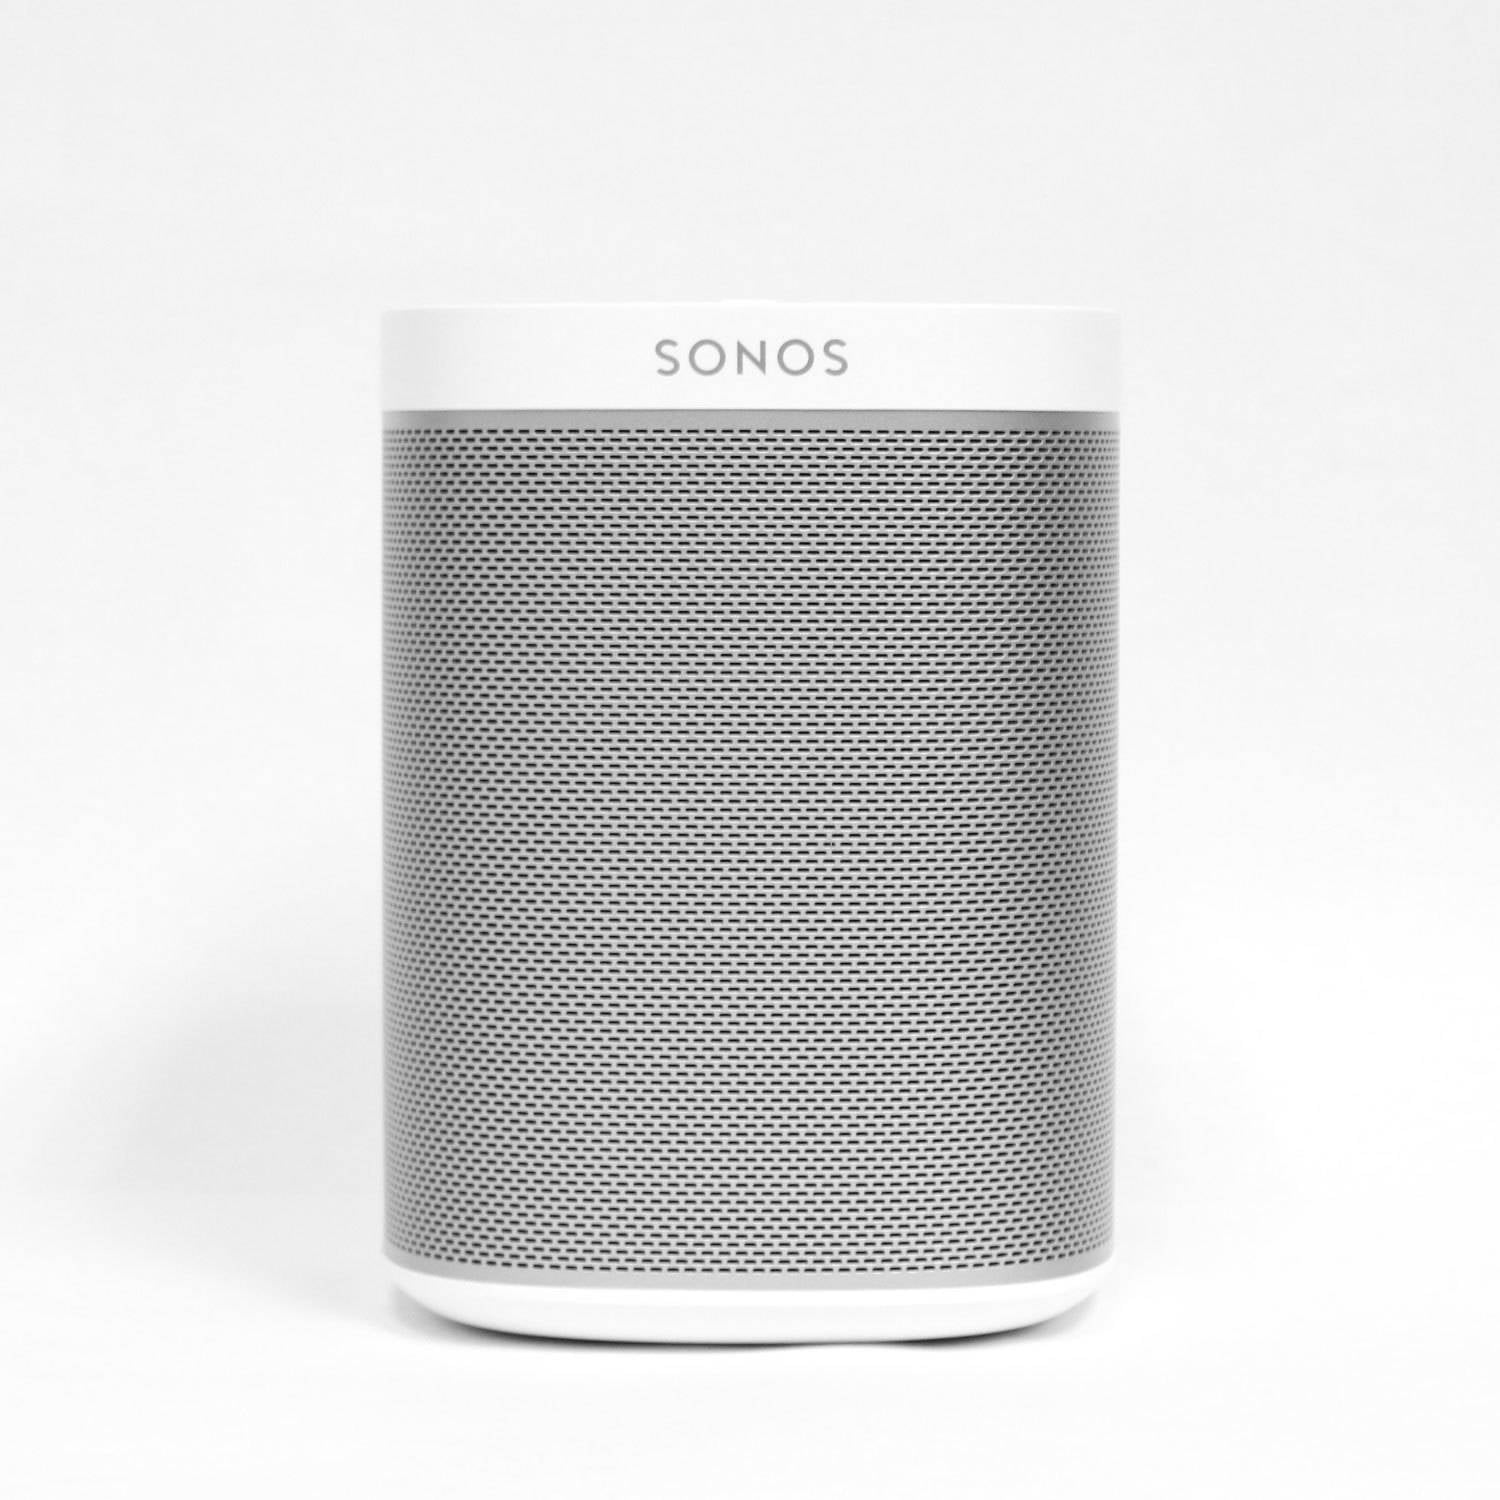 Procent Start krydstogt Sonos PLAY:1 Compact Smart Speaker for Streaming Music, White - Walmart.com